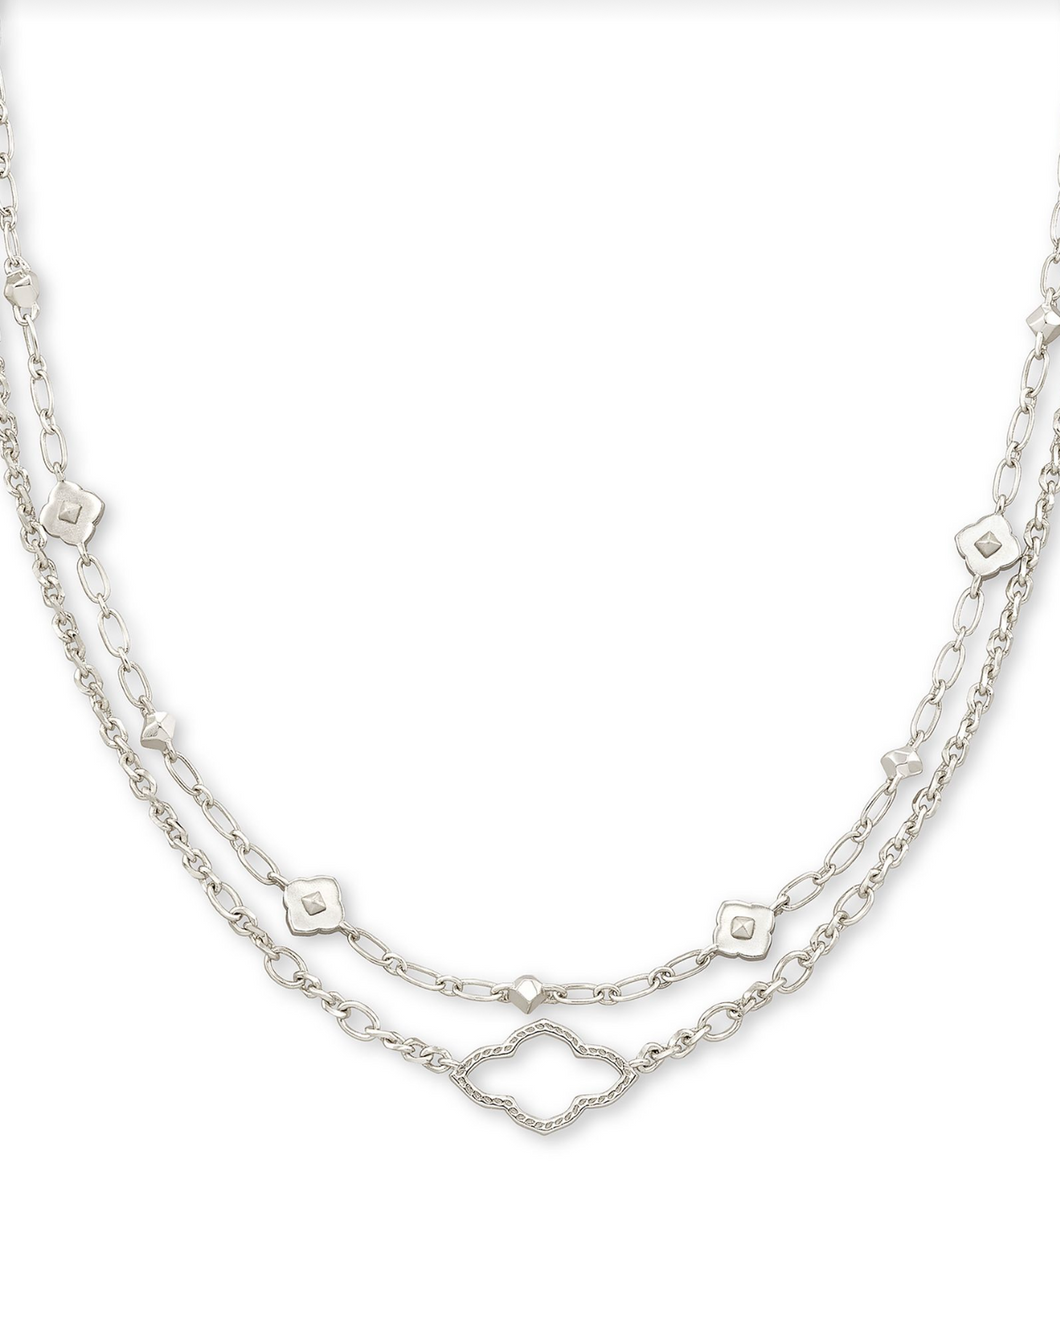 Abbie Multi Strand Necklace in Silver by Kendra Scott